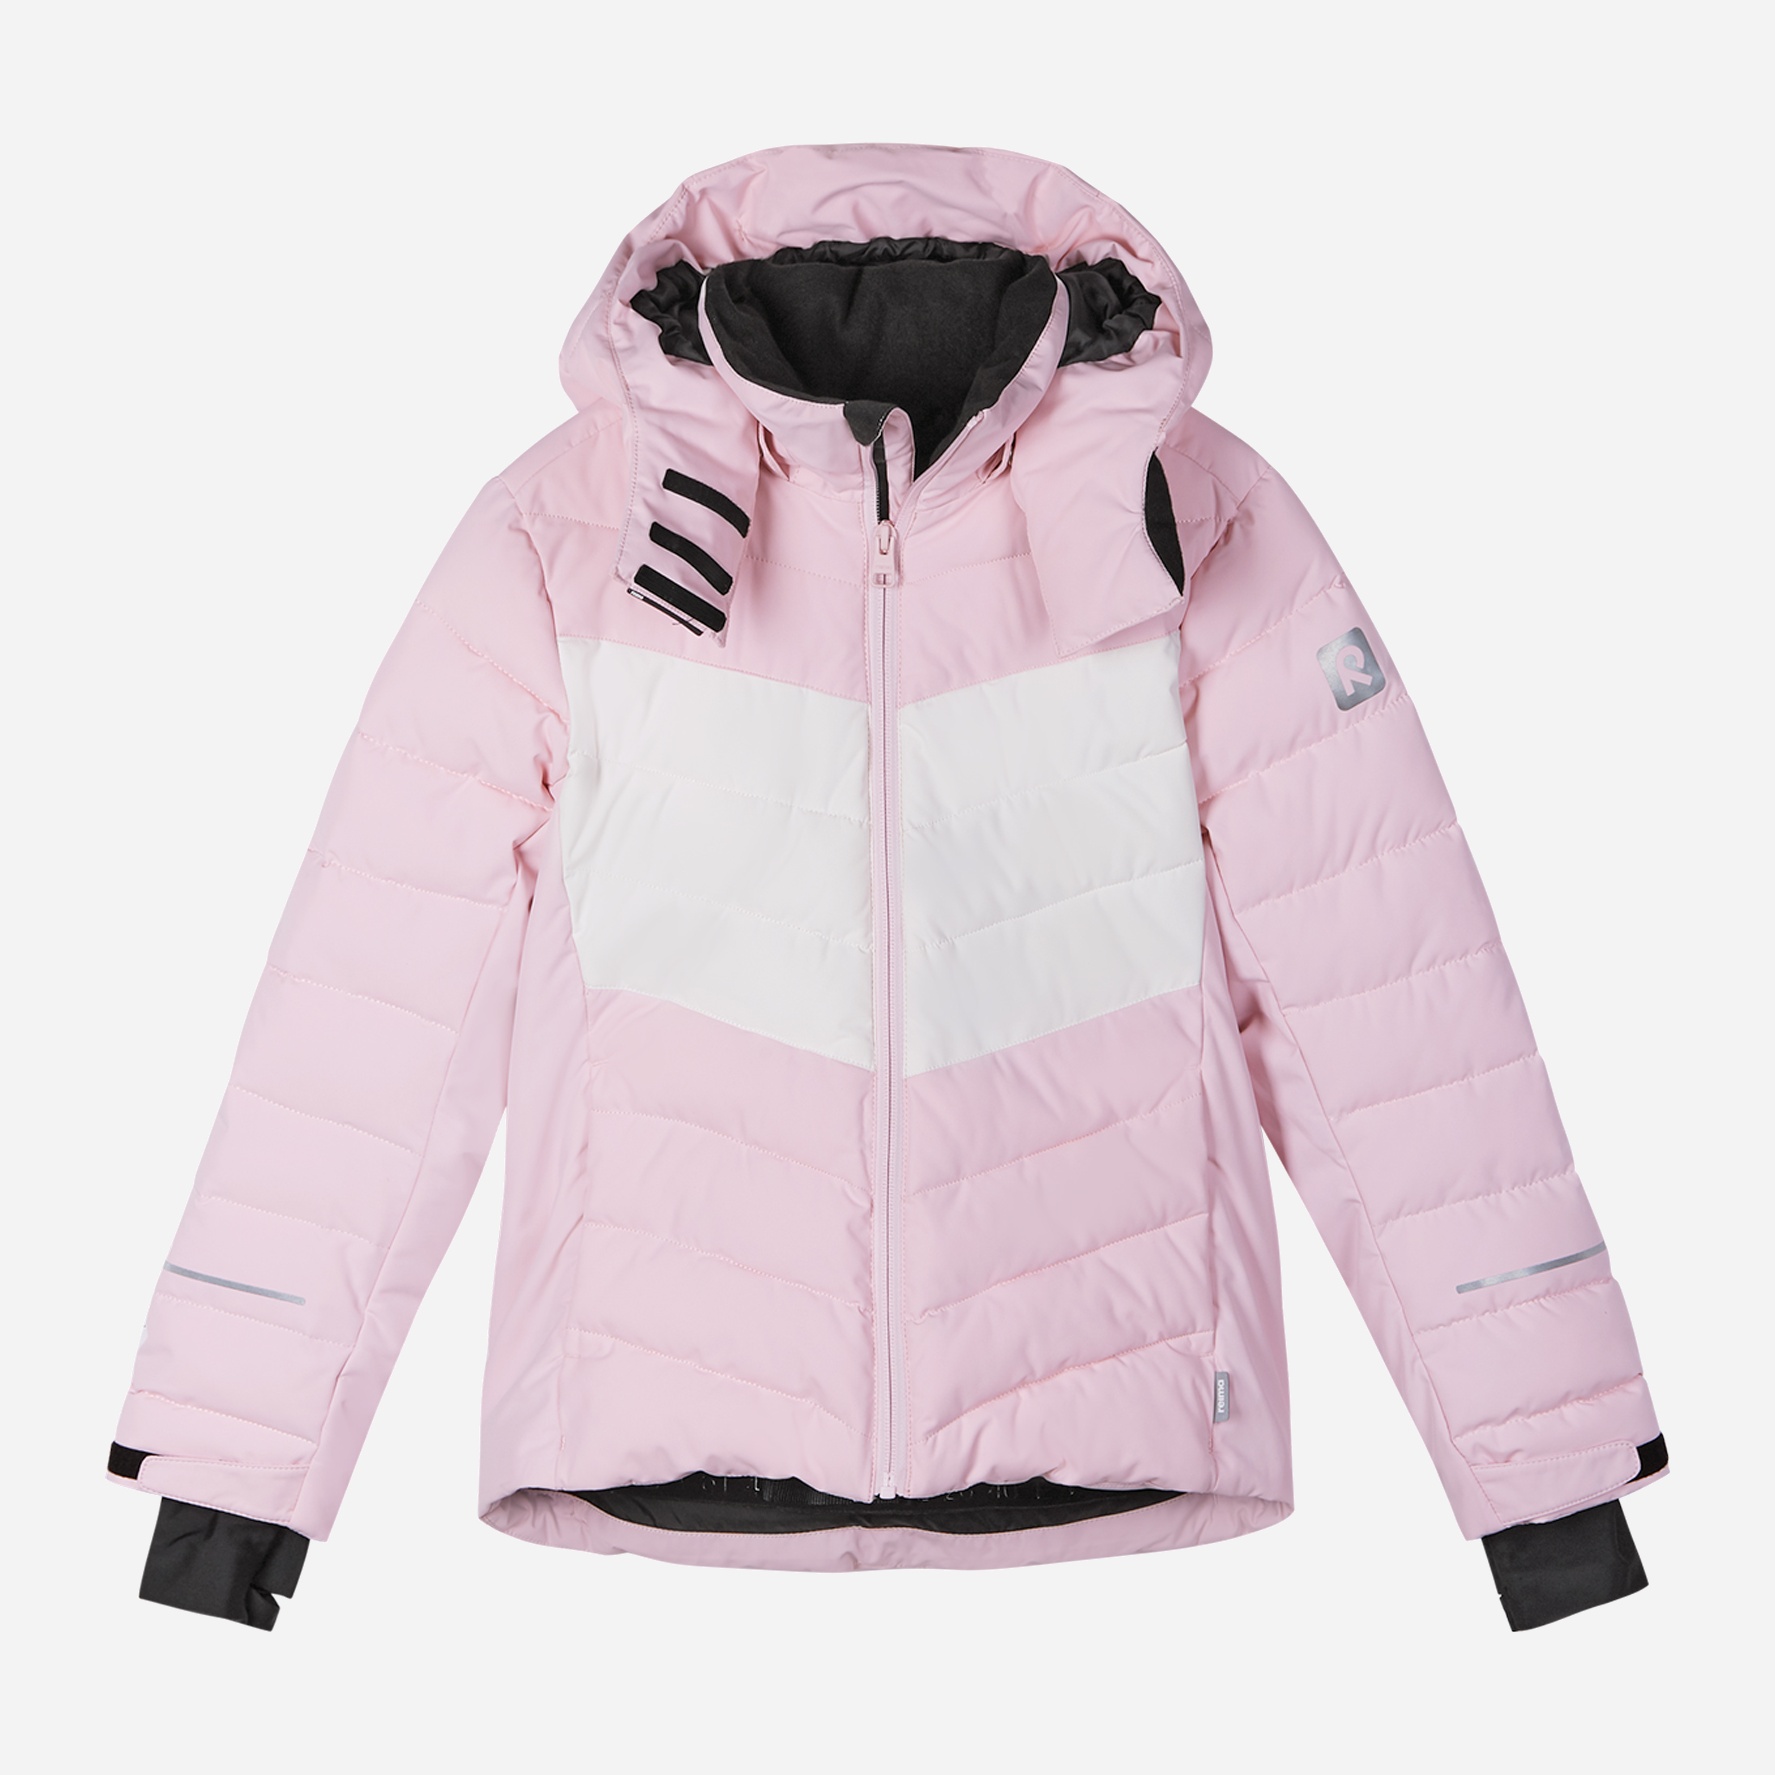 Акция на Дитяча зимова термо лижна куртка для дівчинки Reima Saivaara 531556-4010 104 см от Rozetka